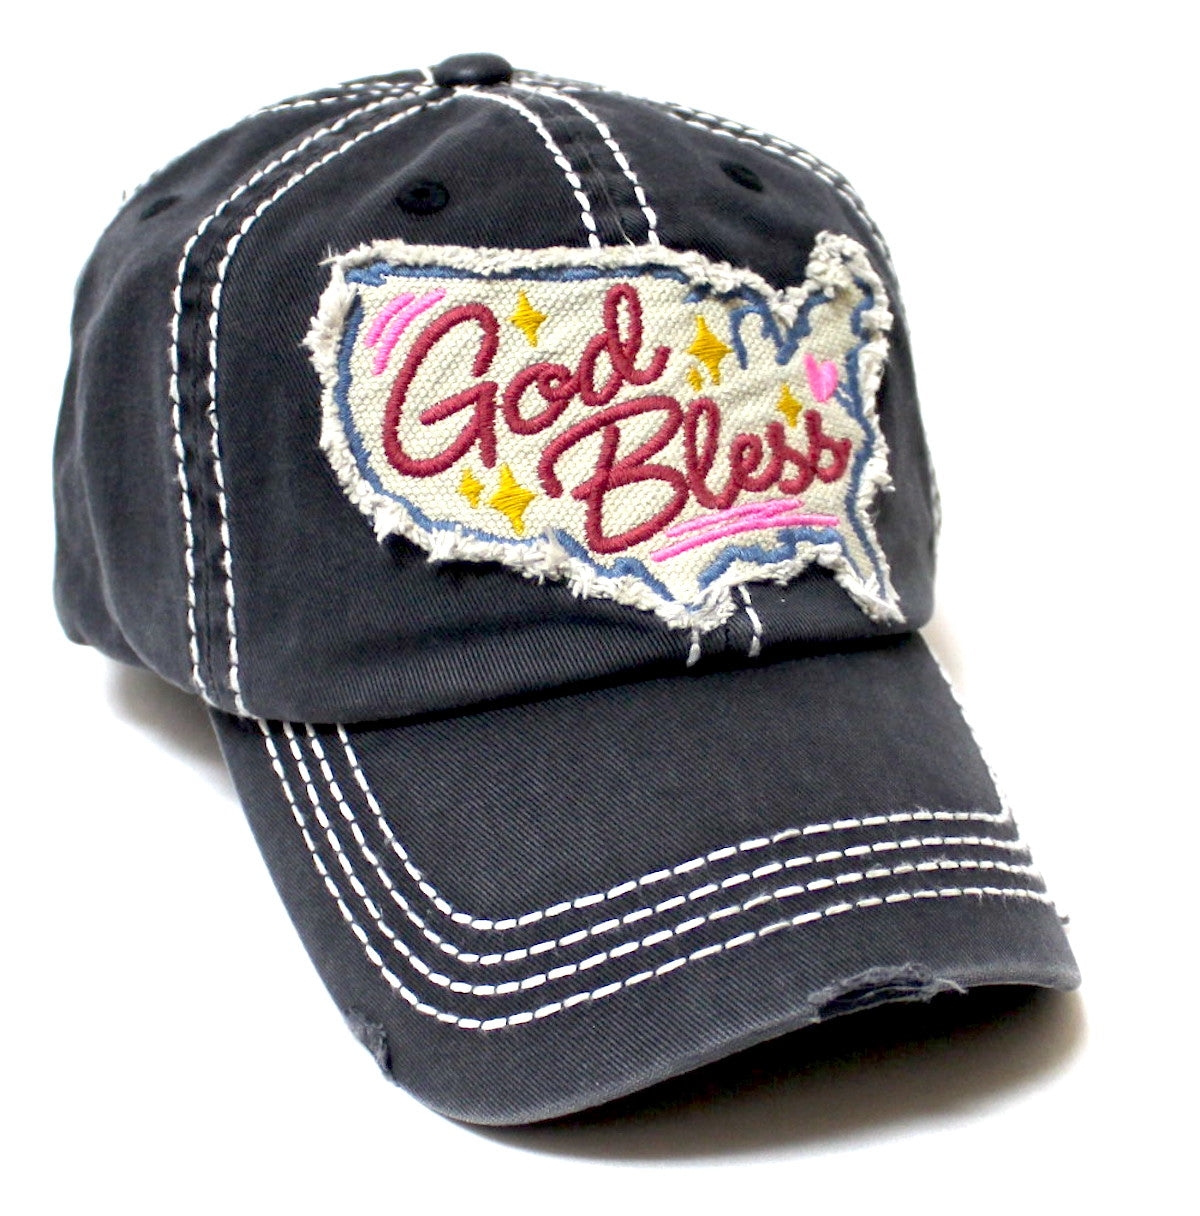 CAPS 'N VINTAGE Unisex Adjustable Ballcap GOD Bless America Patch Embroidery Hat, Black